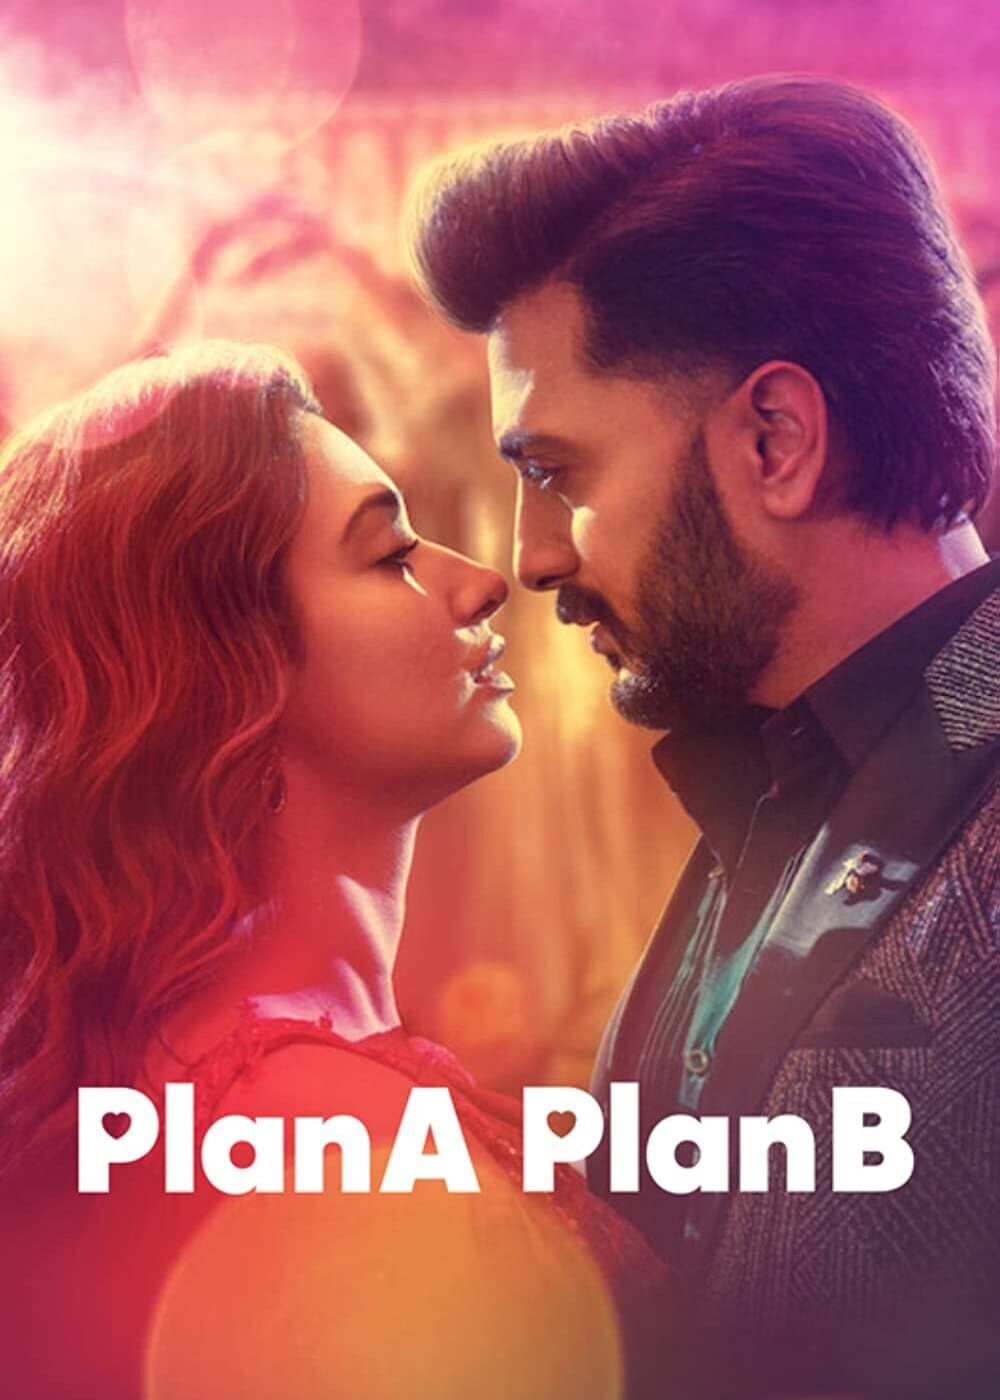 Plan A Plan B Movie (2022) Release Date, Review, Cast, Trailer, Watch